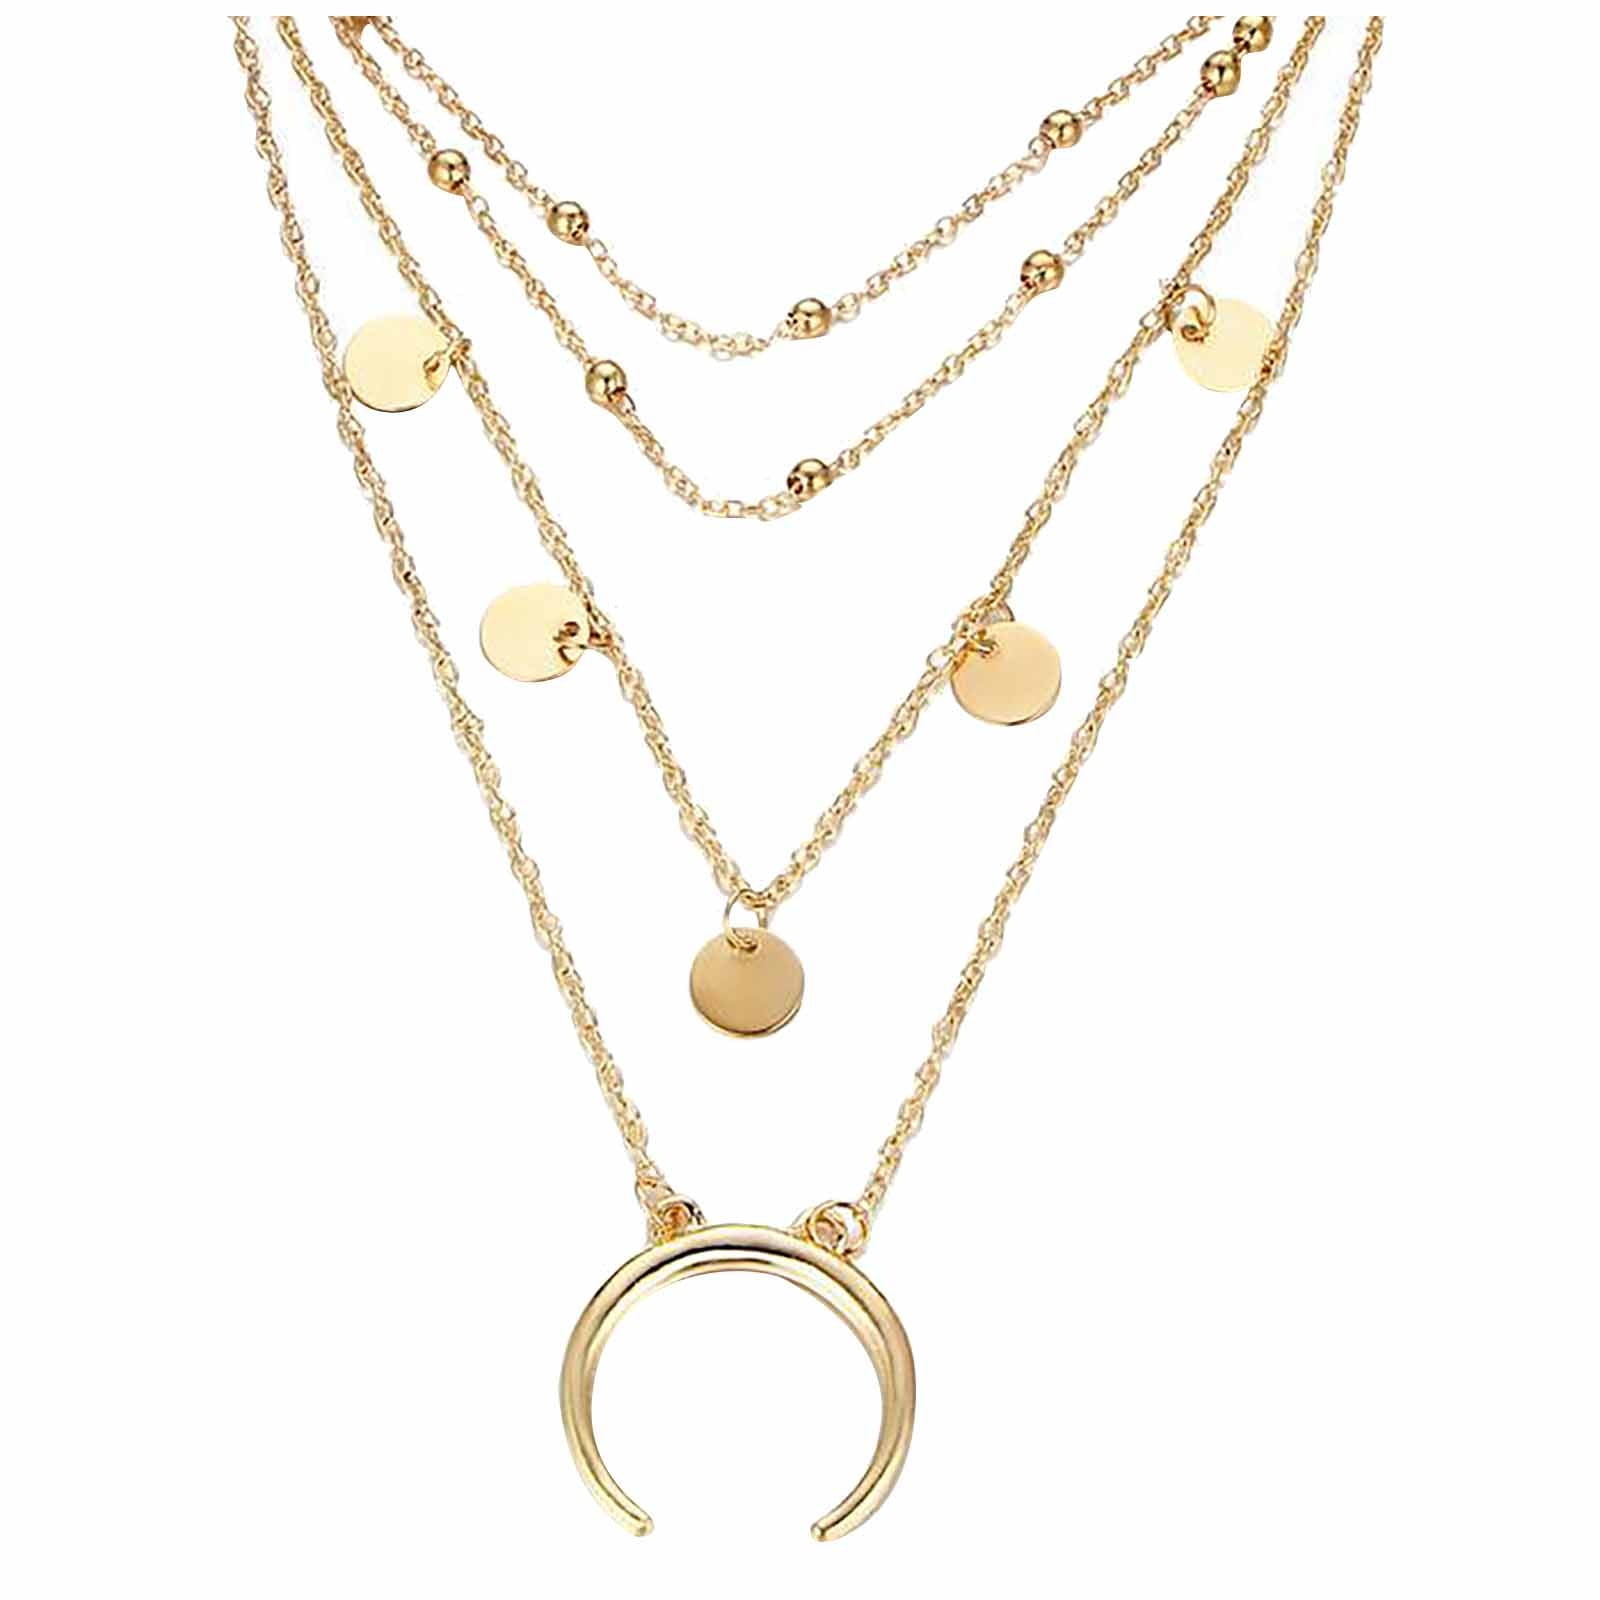 10 pieces moon pendant gold